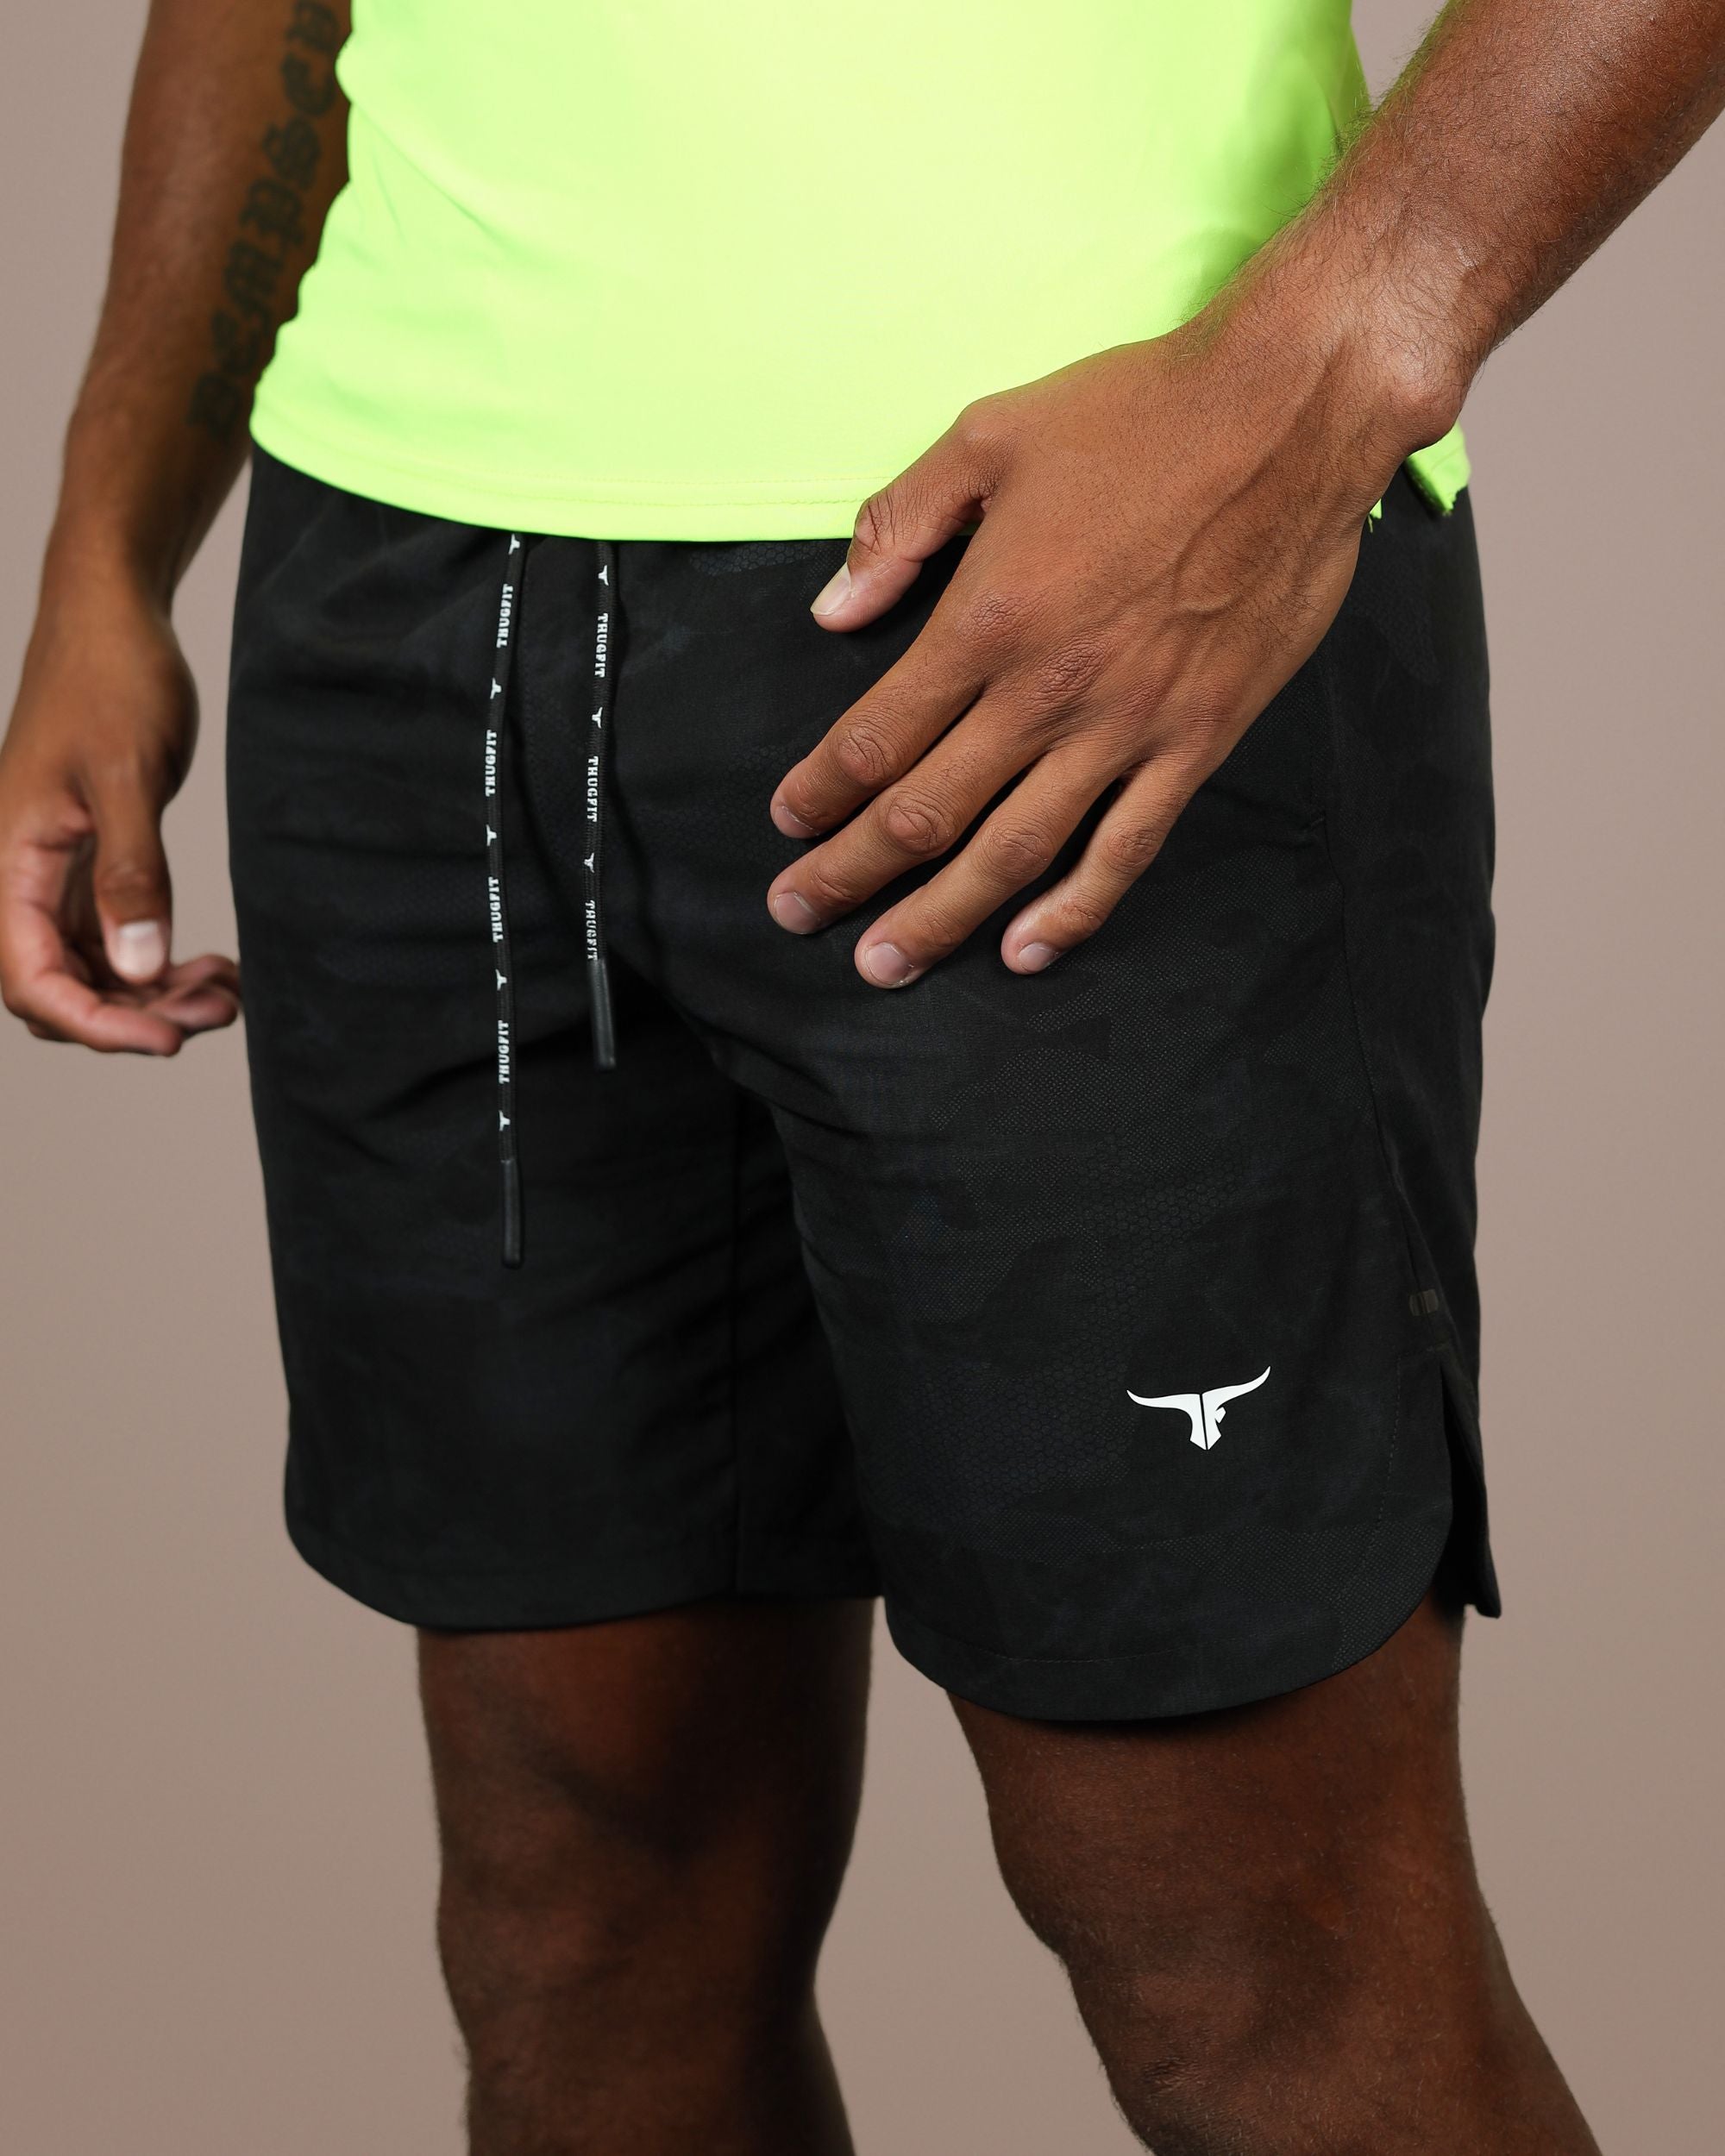 ProTech Activewear Men's Shorts (7" Inseam)- Black